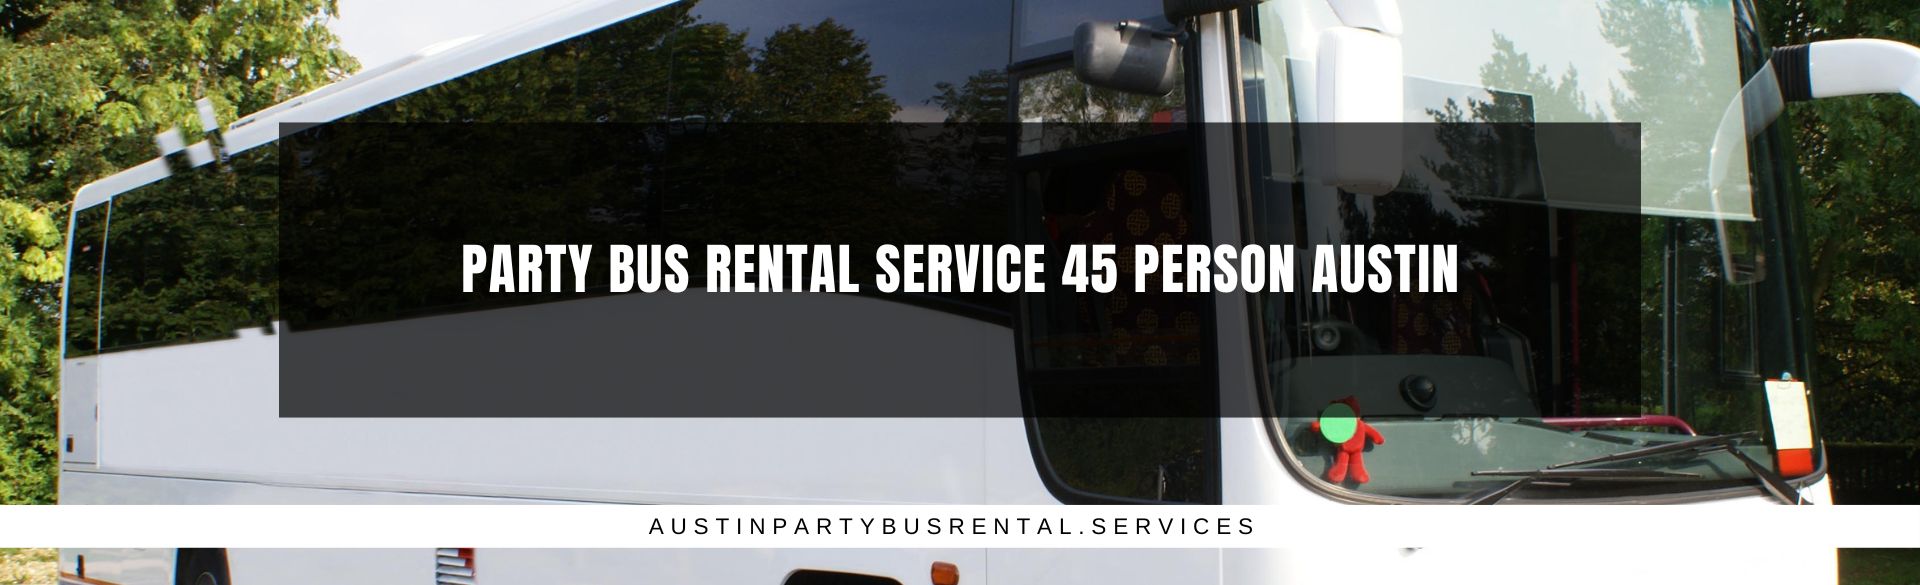 Party Bus Rental Service 45 Person Austin